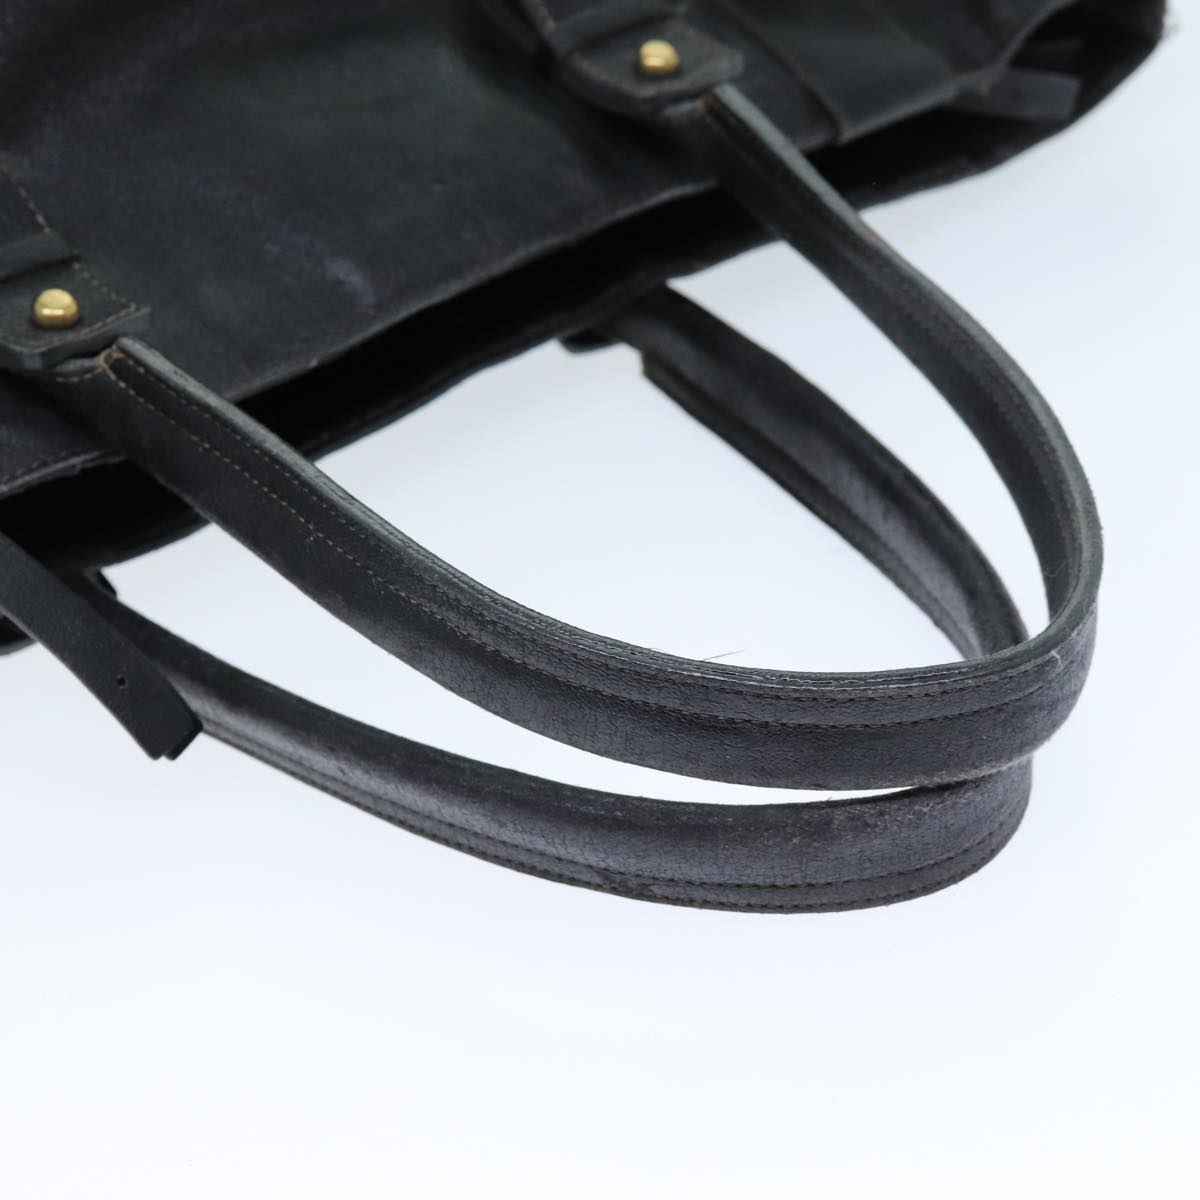 Chloe Hand Bag Leather Black Auth bs14492